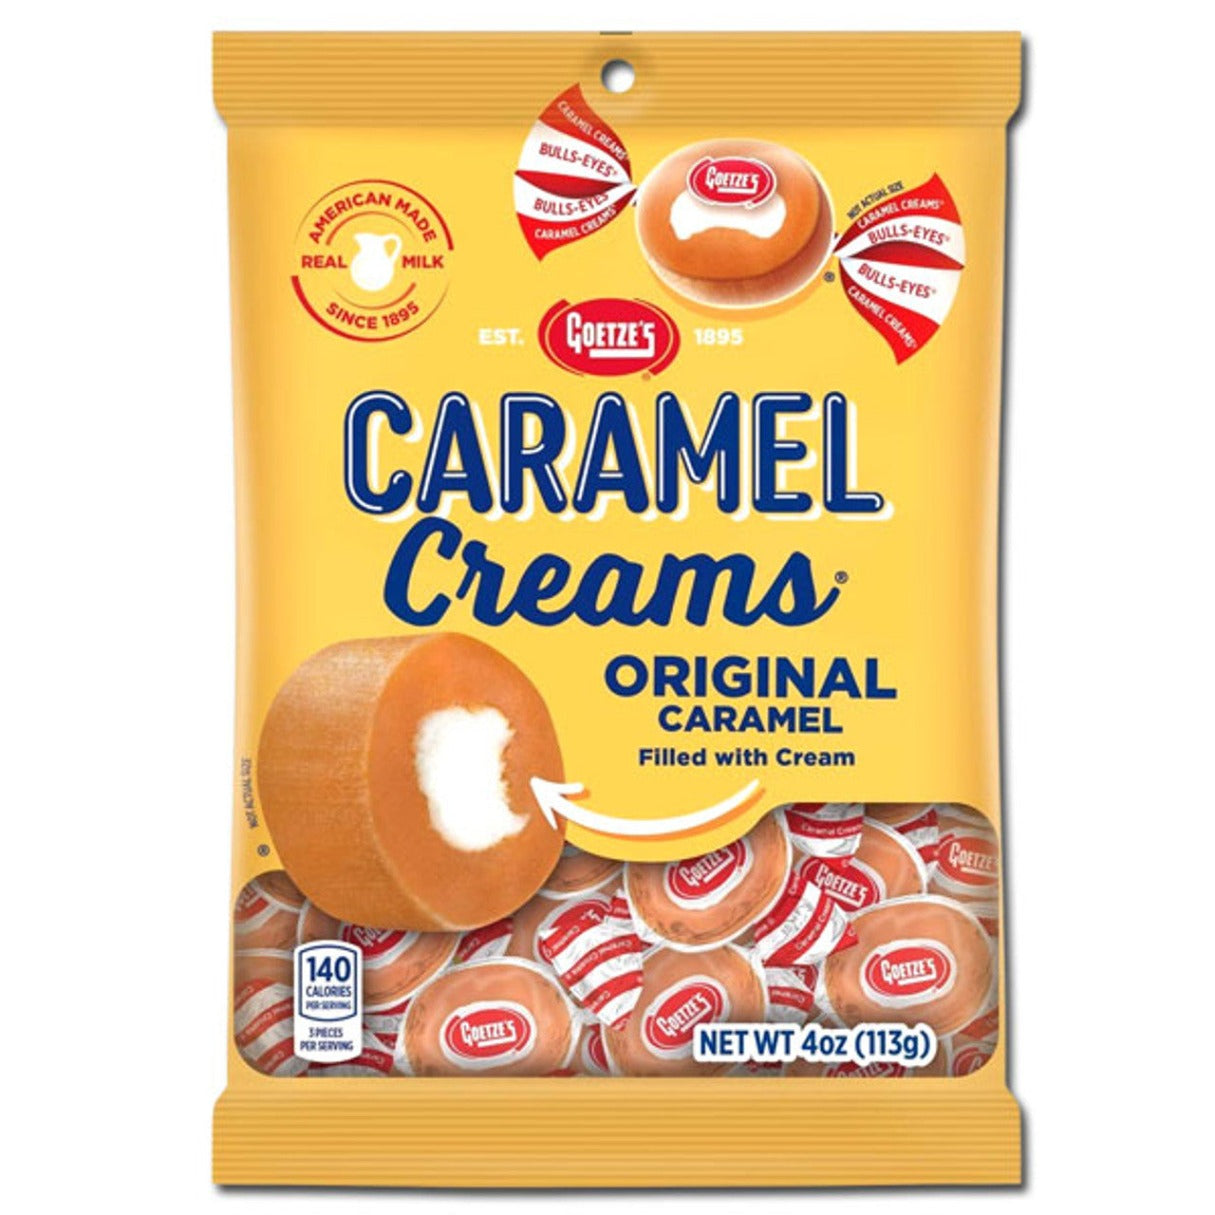 Goetzes Caramel Creams Bag 4oz - 12ct